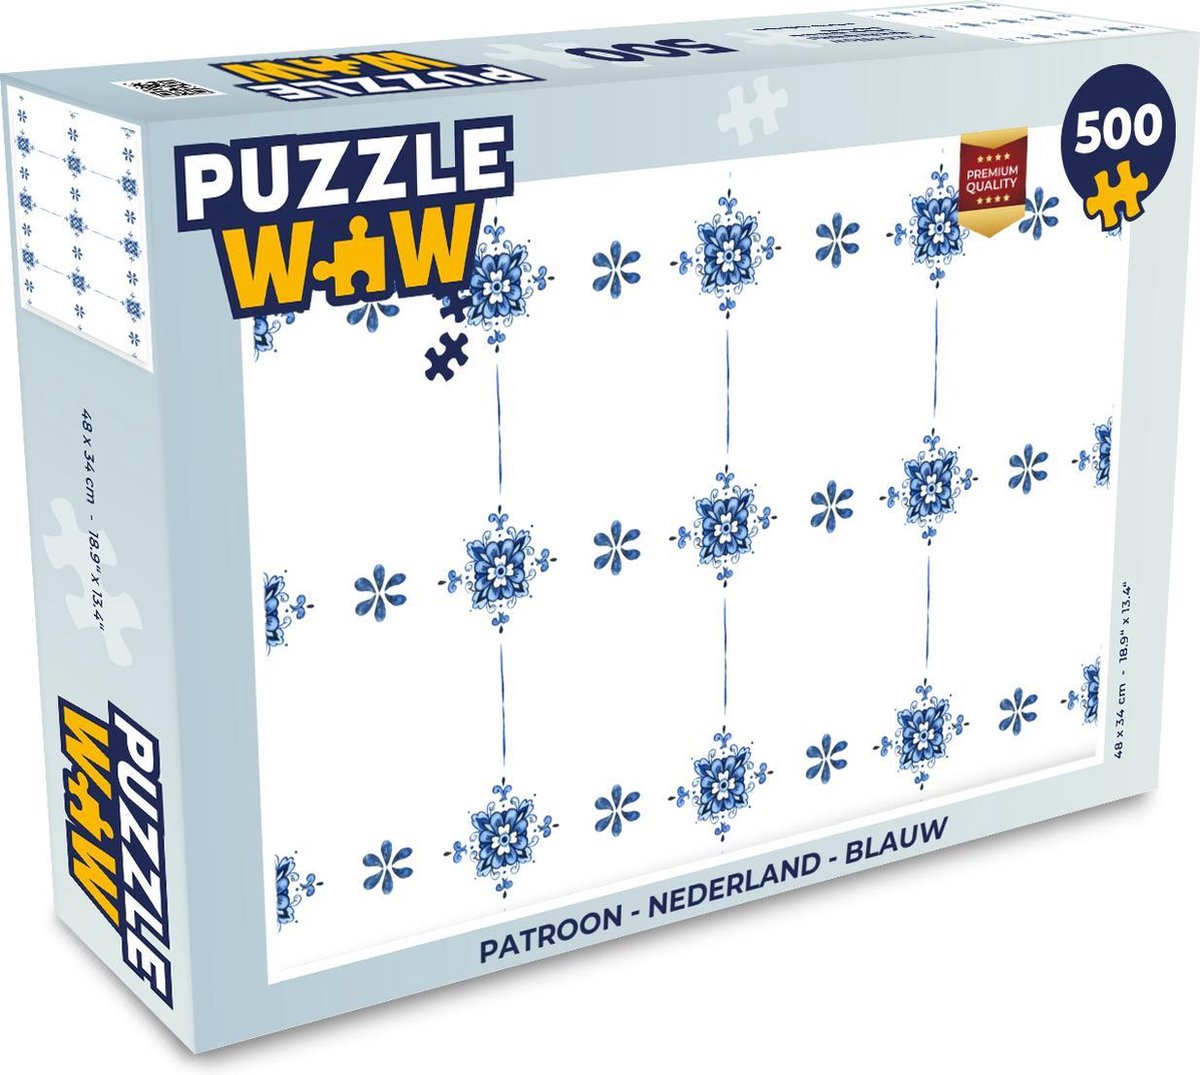 Afbeelding van product PuzzleWow  Puzzel Patroon - Nederland - Blauw - Legpuzzel - Puzzel 500 stukjes